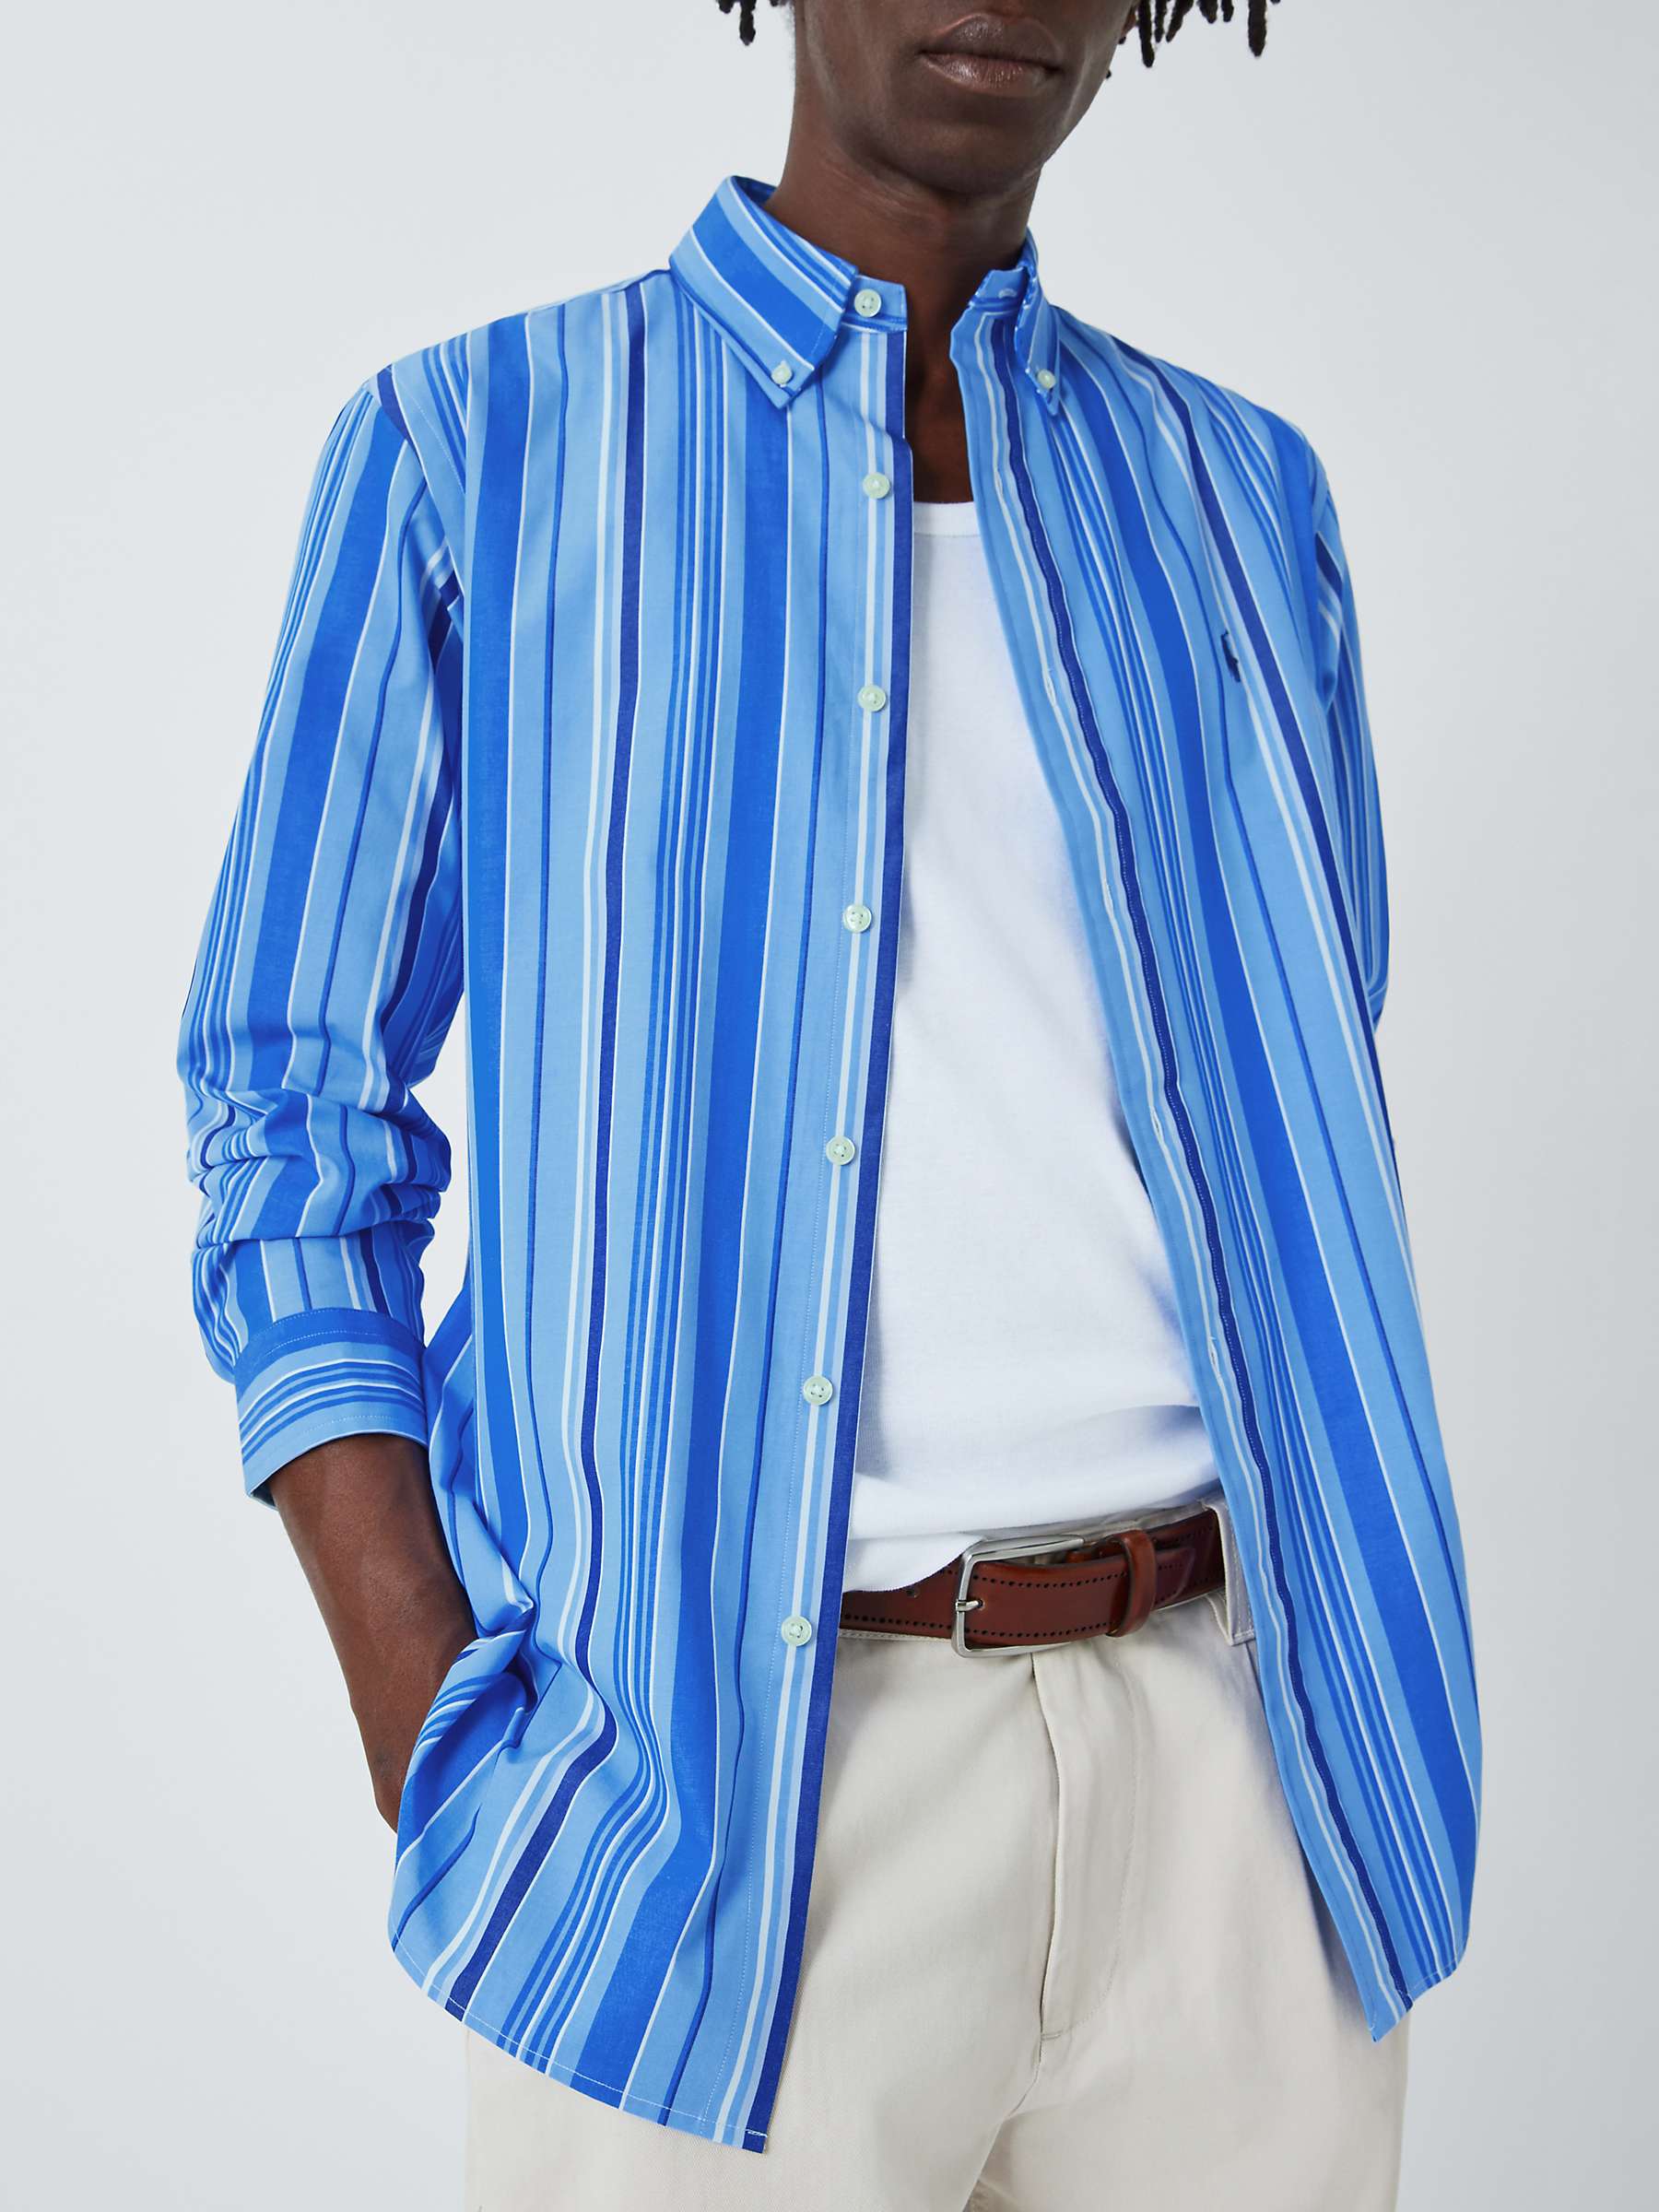 Buy Polo Ralph Lauren Long Sleeve Striped Shirt, Blue Online at johnlewis.com